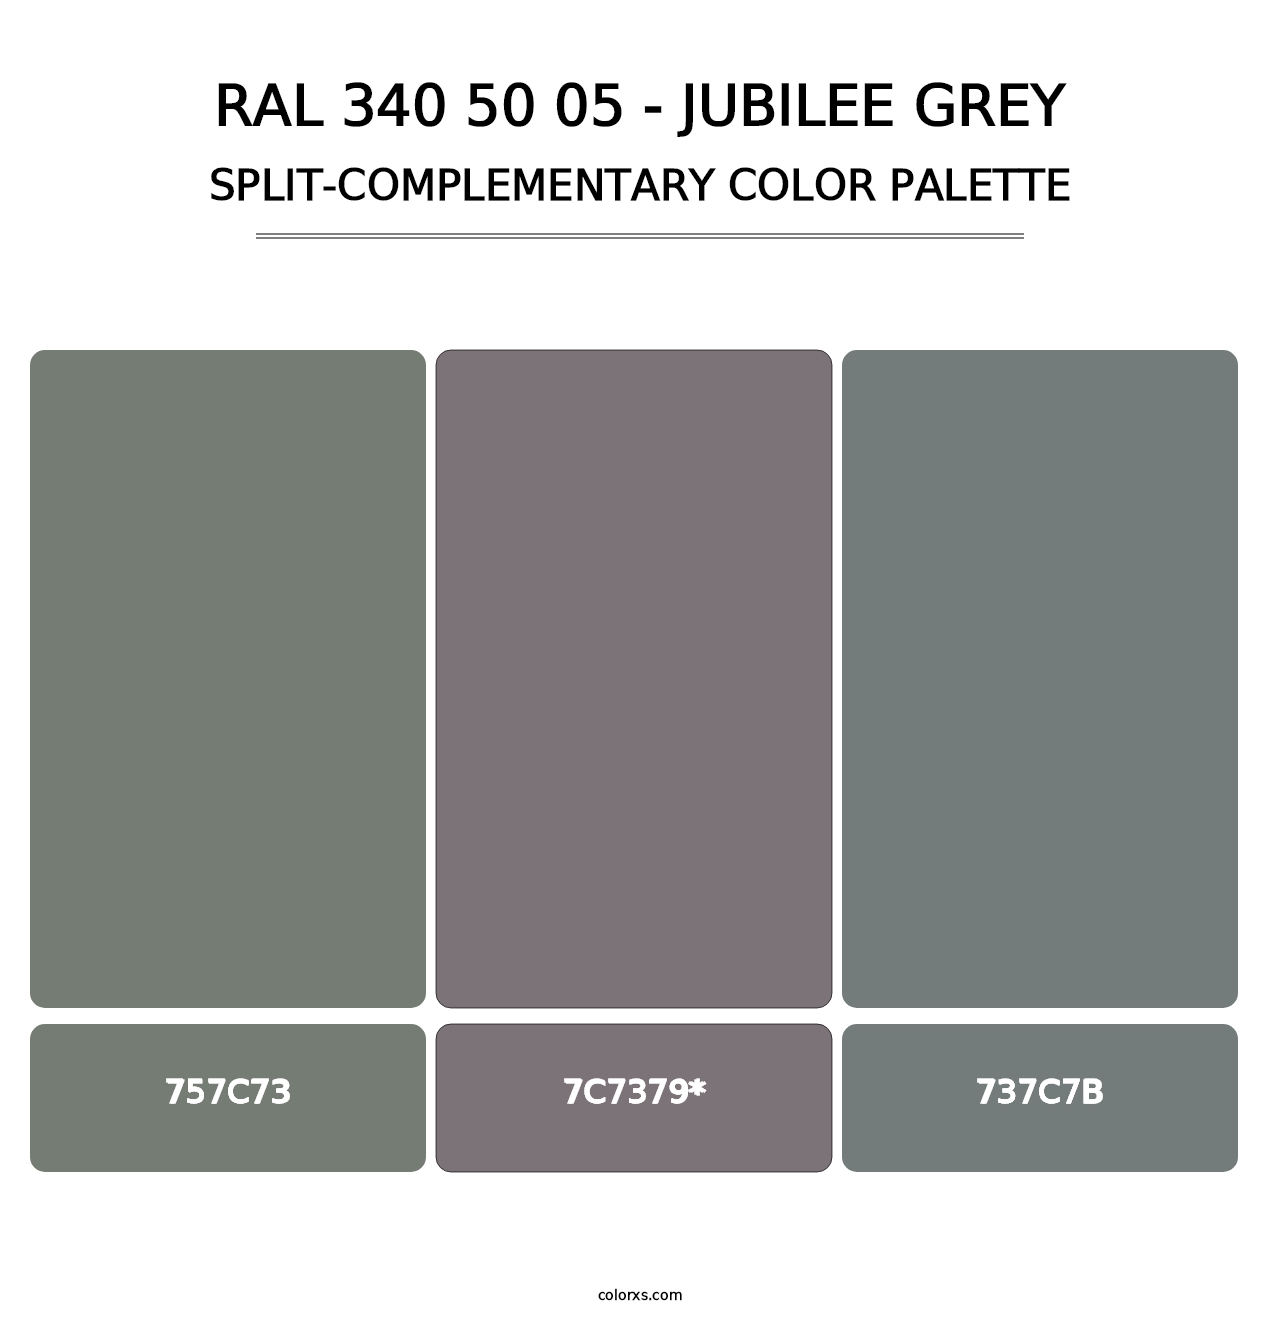 RAL 340 50 05 - Jubilee Grey - Split-Complementary Color Palette